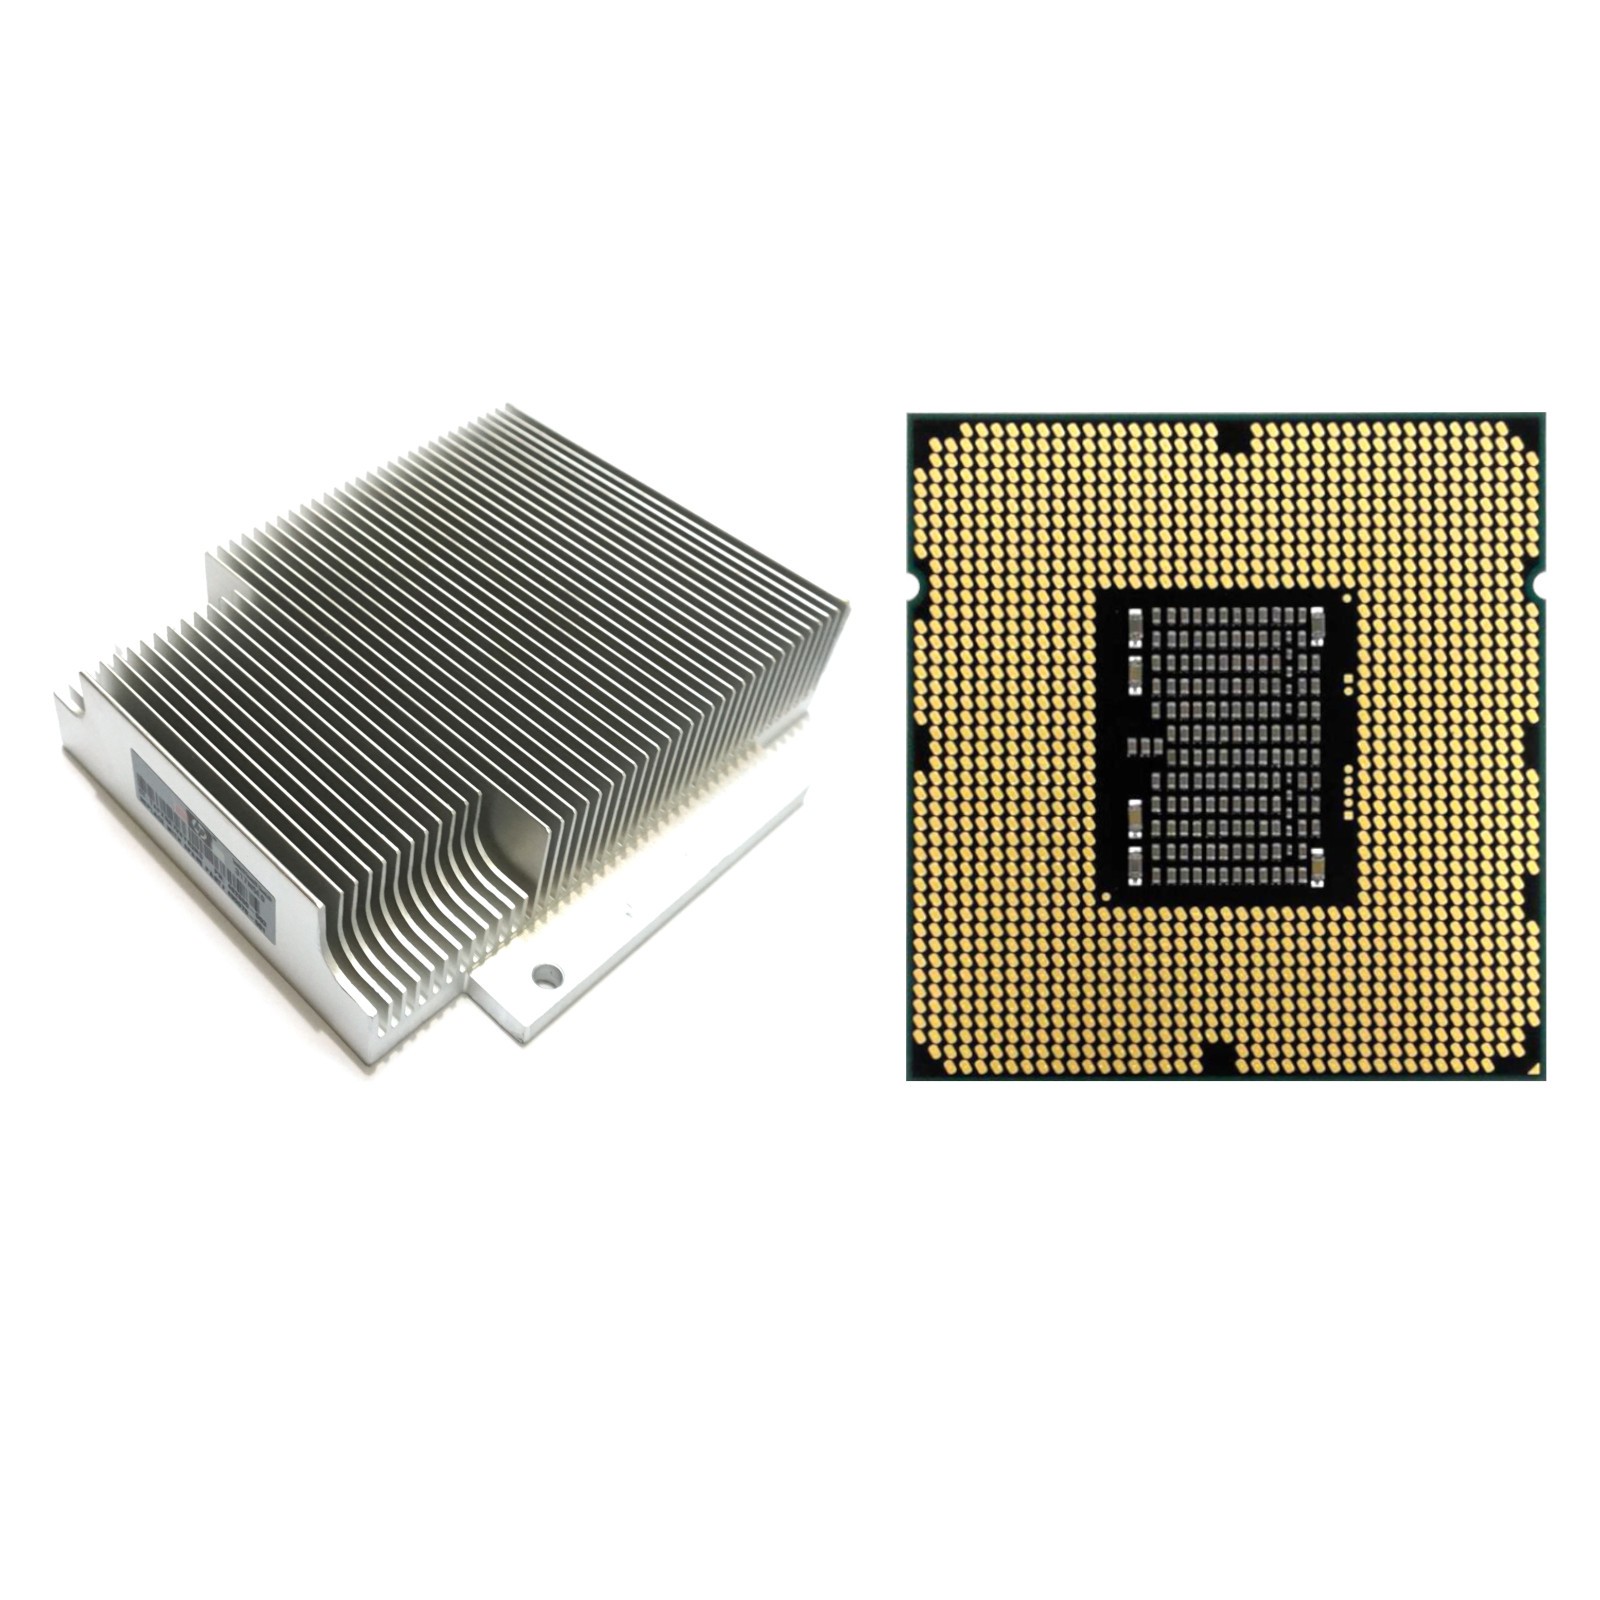 HP (621552-L21) ProLiant DL360 G6/DL360 G7 - Intel Xeon X5667 CPU1 Kit